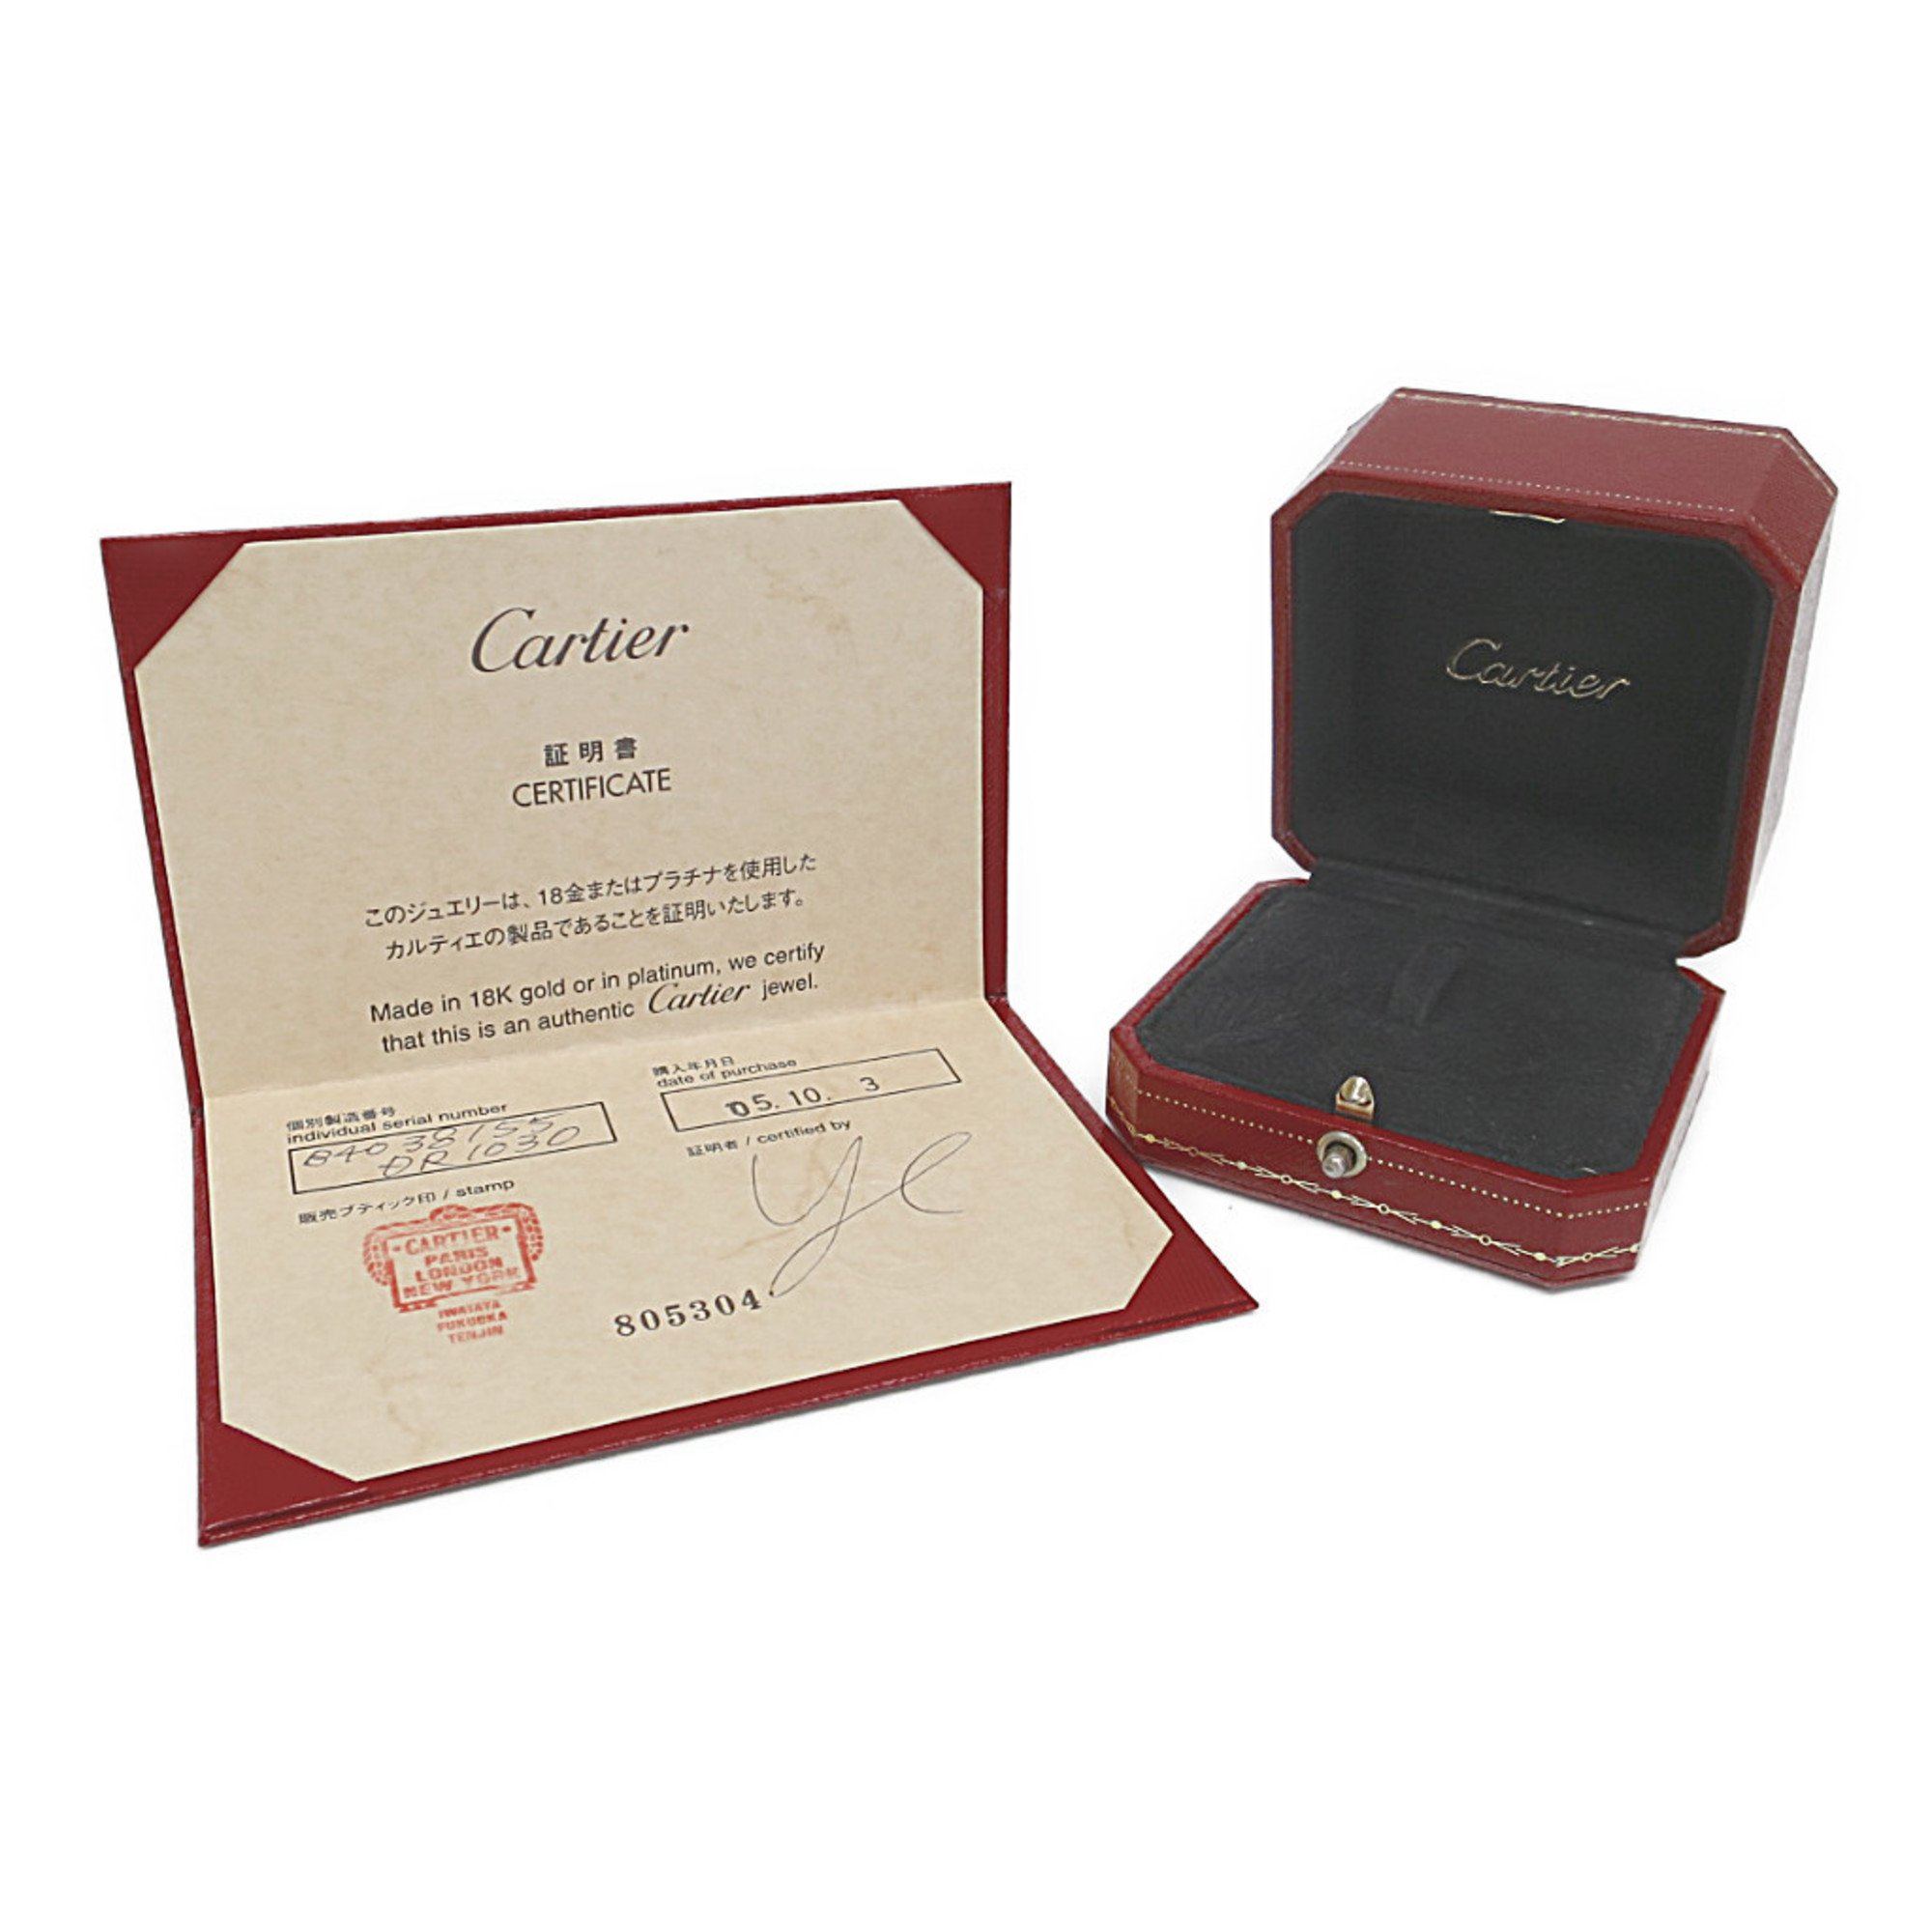 Cartier Paris Ring White Gold (18K) Fashion No Stone Band Ring Silver